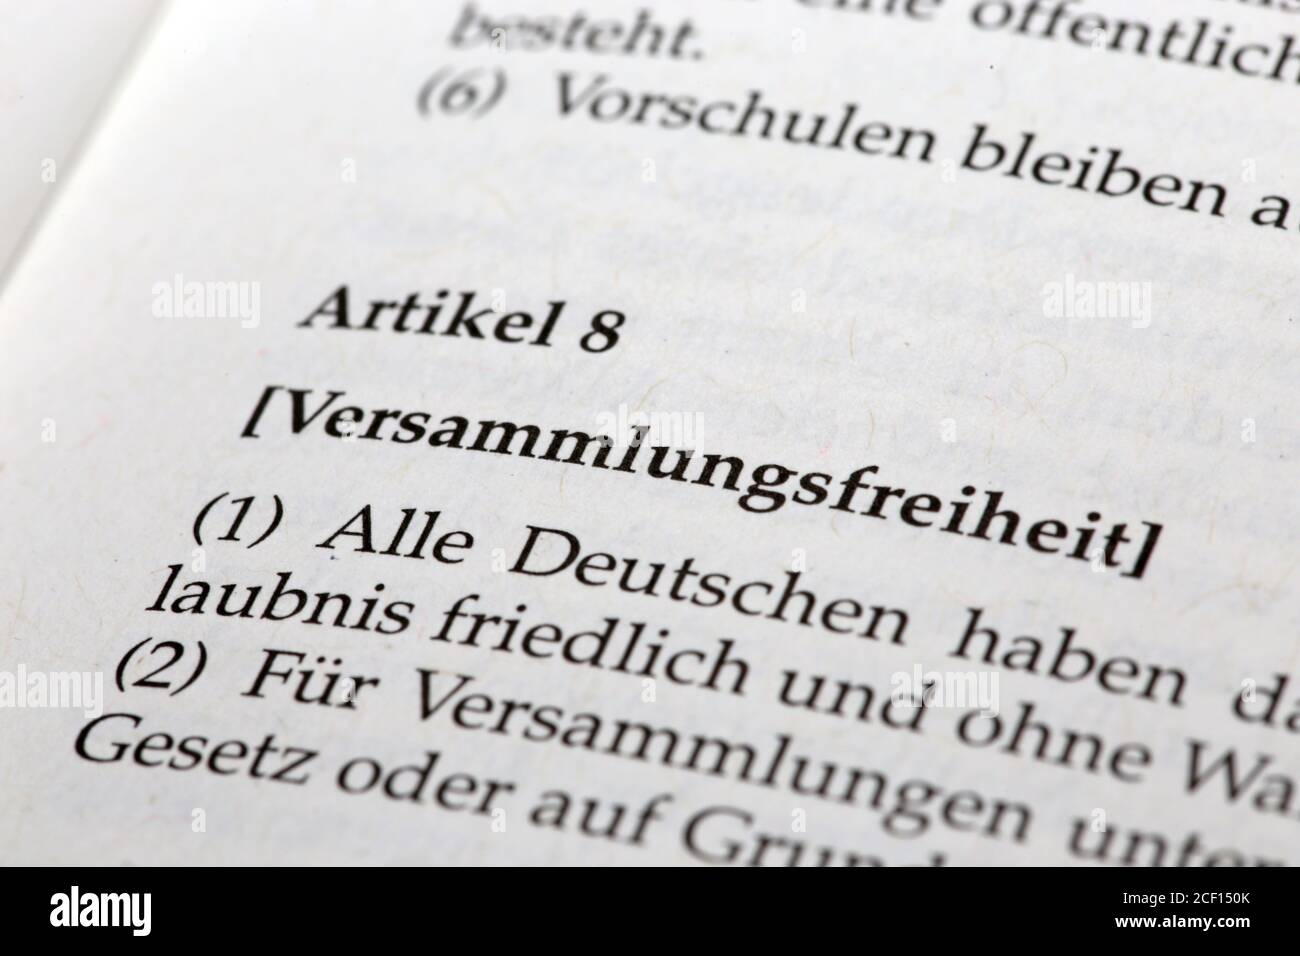 German Basic Law Article 8, Freedom of assembly (Versammlungsfreiheit) Stock Photo